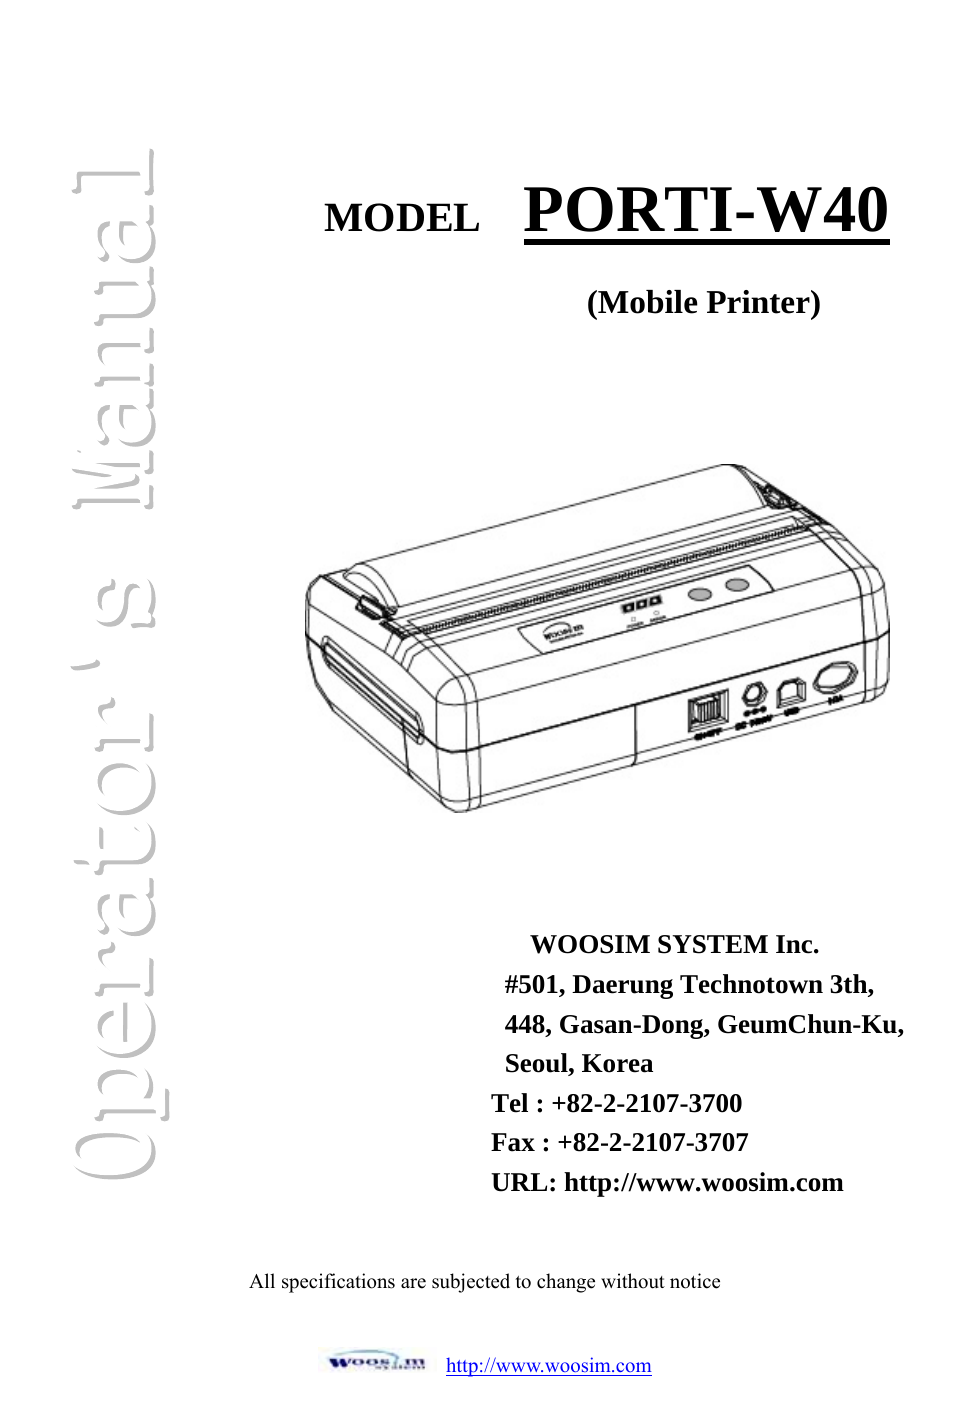 http://www.woosim.comAll specifications are subjected to change without notice  MODEL PORTI-W40(Mobile Printer)WOOSIM SYSTEM Inc. #501, Daerung Technotown 3th, 448, Gasan-Dong, GeumChun-Ku, Seoul, Korea Tel : +82-2-2107-3700 Fax : +82-2-2107-3707 URL: http://www.woosim.com